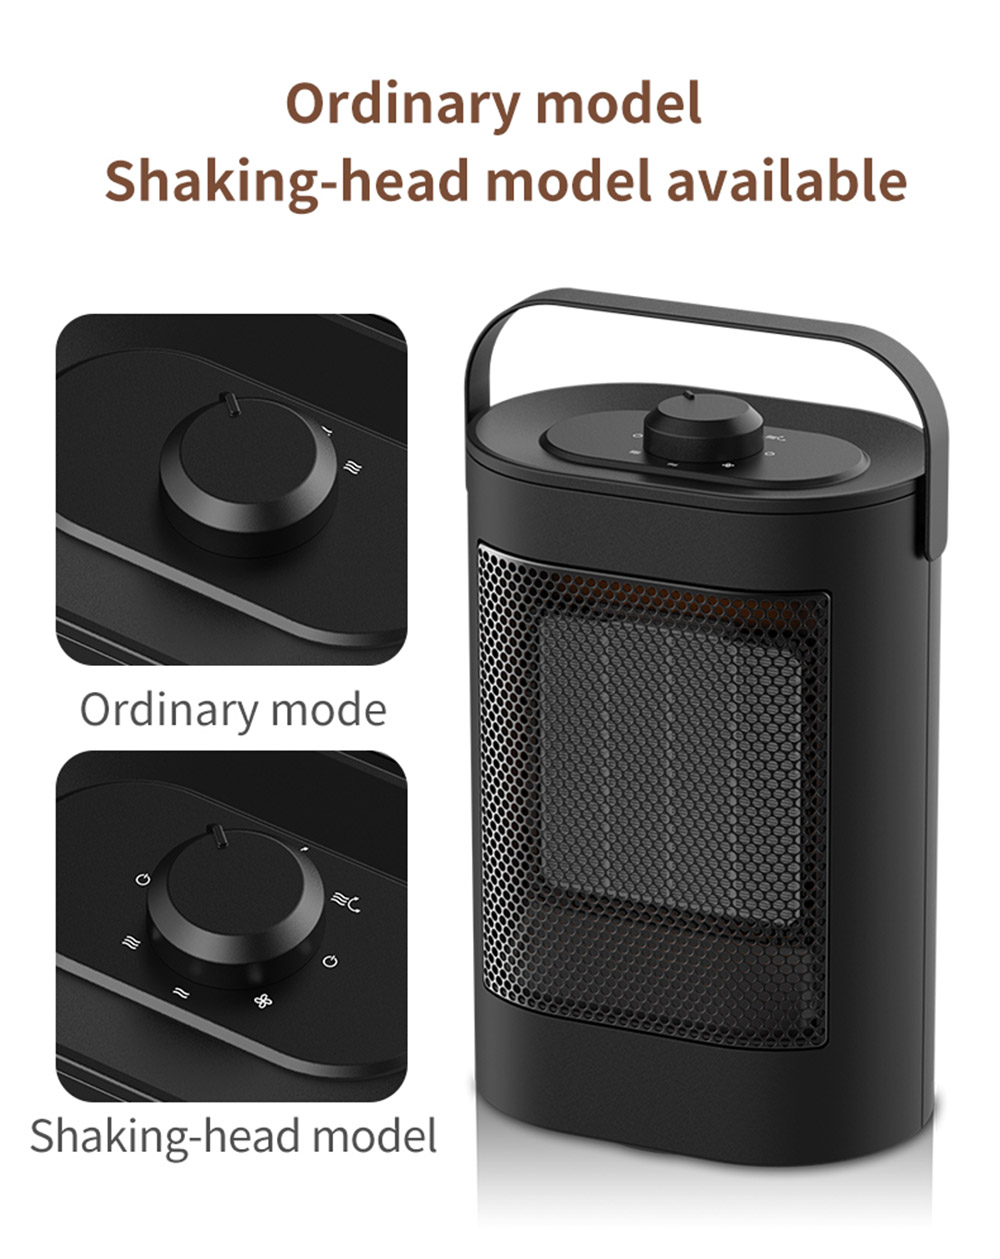 HQ-YND-900D 1500W Portable Vertical Mini Electric Heater, PTC Ceramic Flame Retardant Space Heater, 3-Gear Adjustment - UK Plug